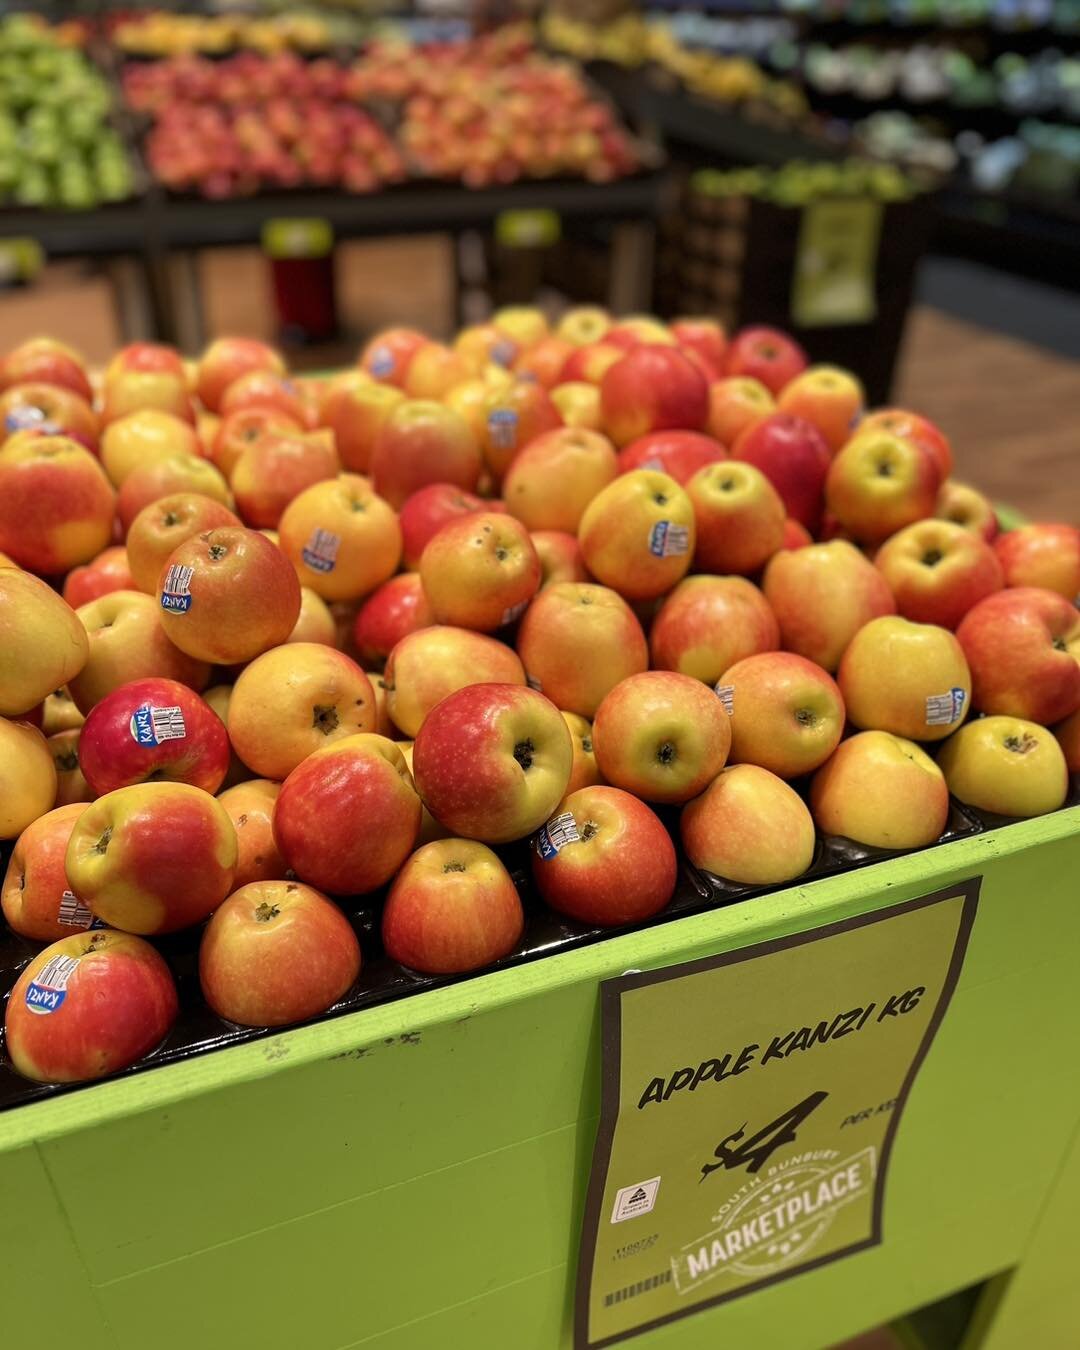 Australian grown Kanzi Apples currently $4 per/ kg 

#southbunburymarketplace #sbmarketplace #yourlocalmarketplace #supportlocal #freshandlocal